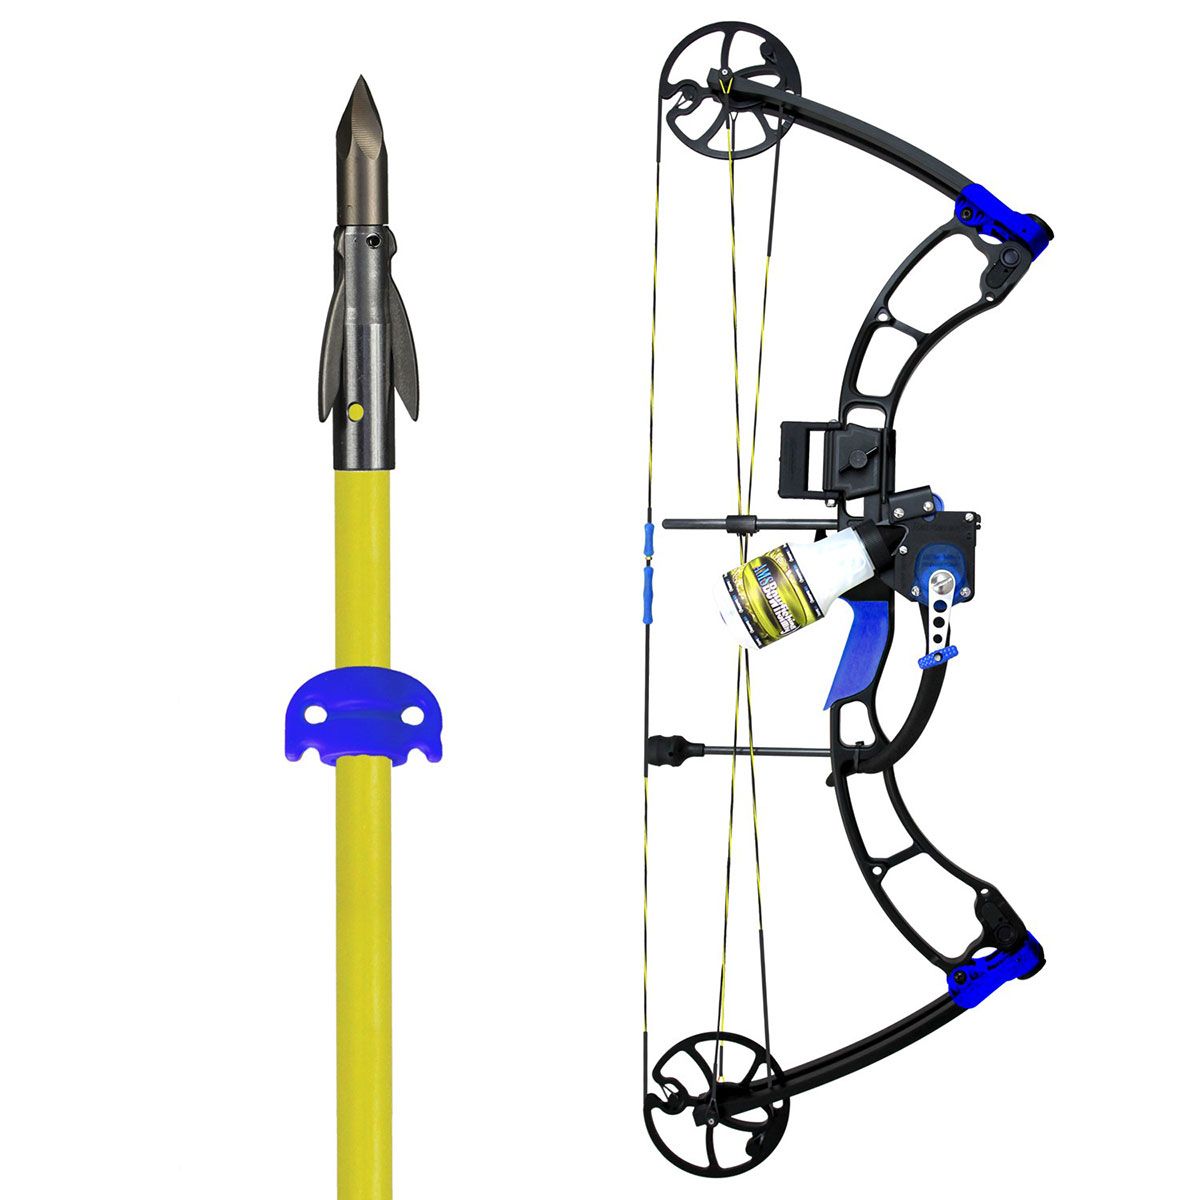 Crossbow Kits and Big Game Bowfishing